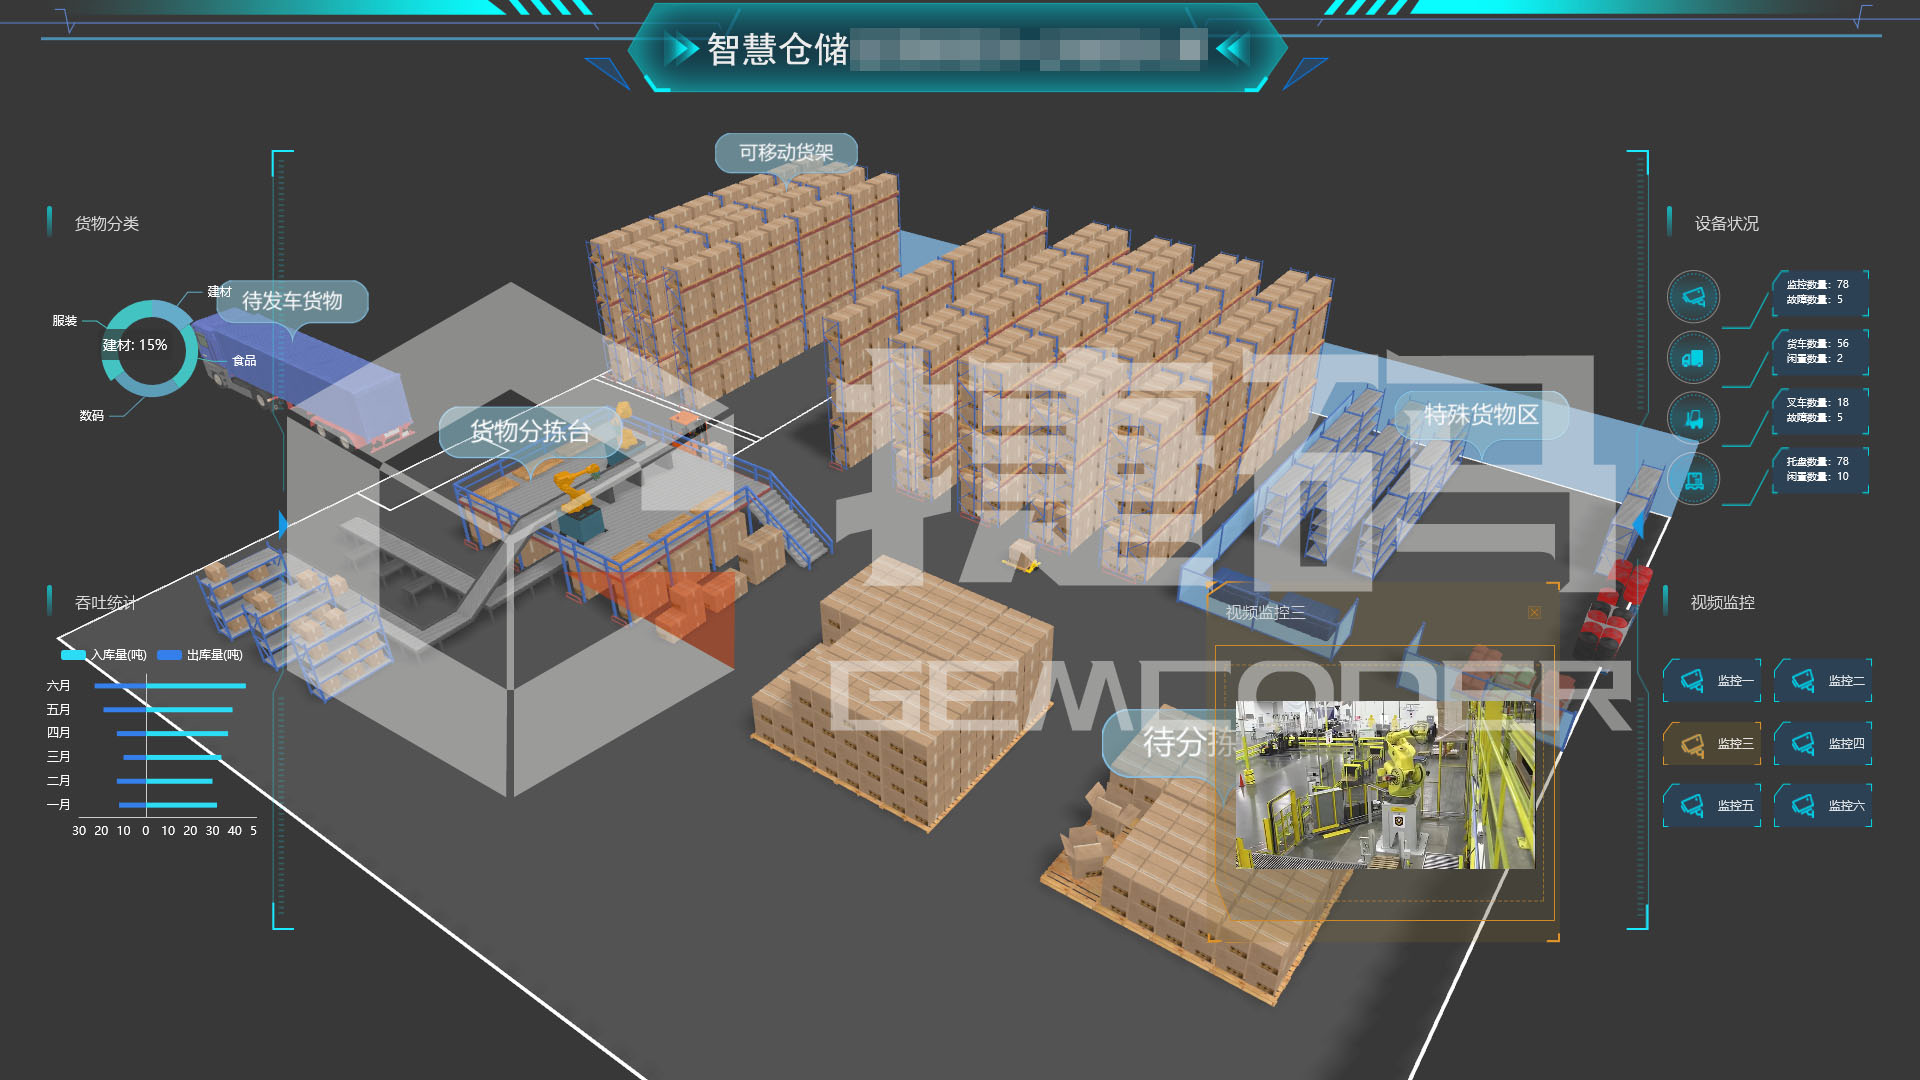 3D 仓储产教融合系统